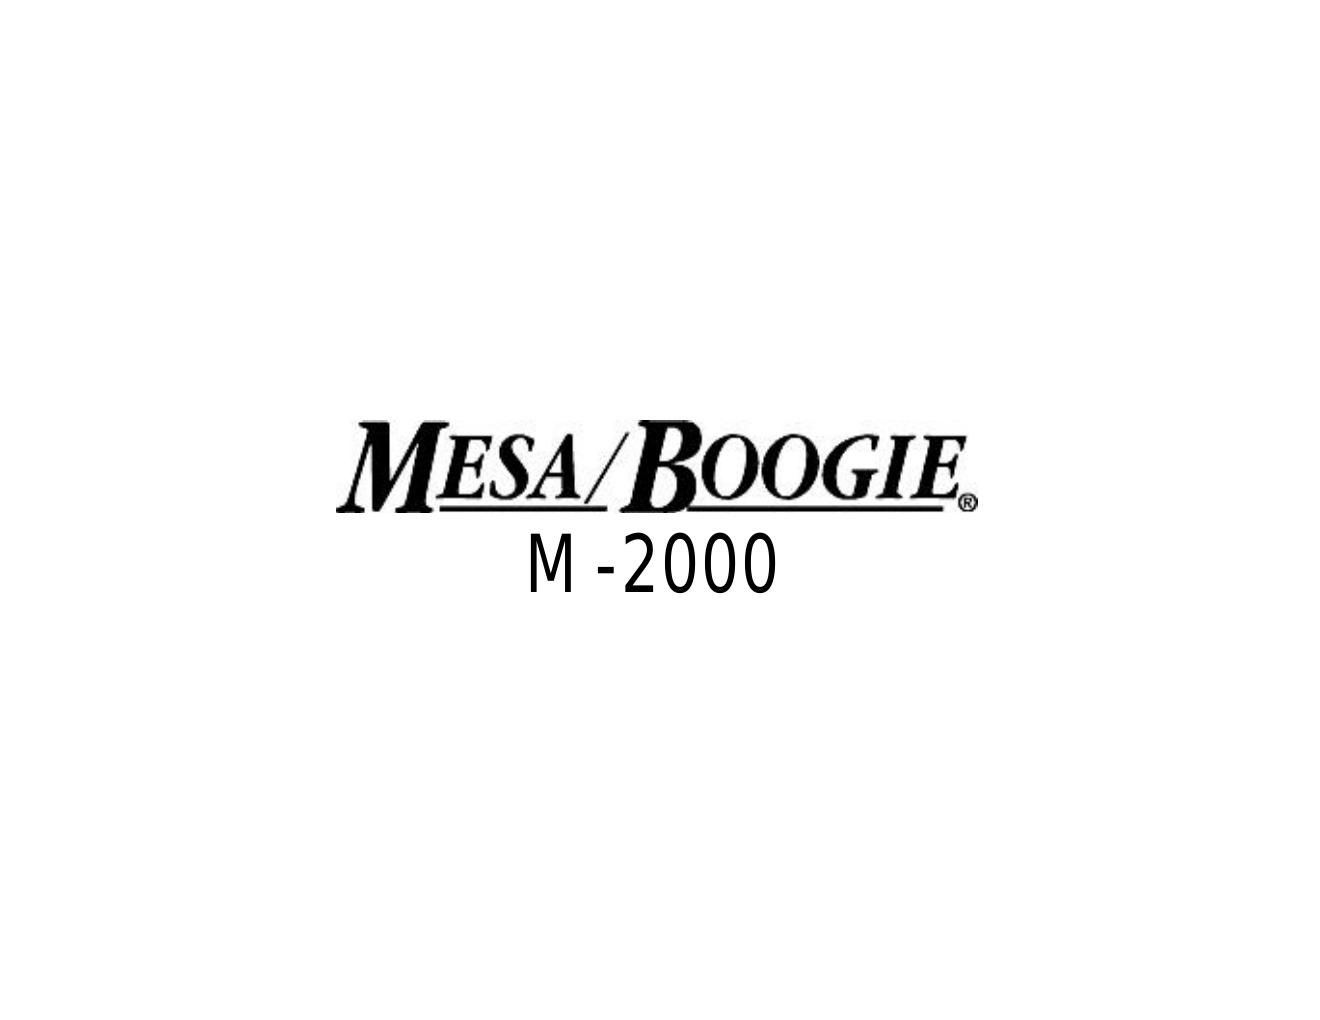 mesaboogie bass m 2000 schematics